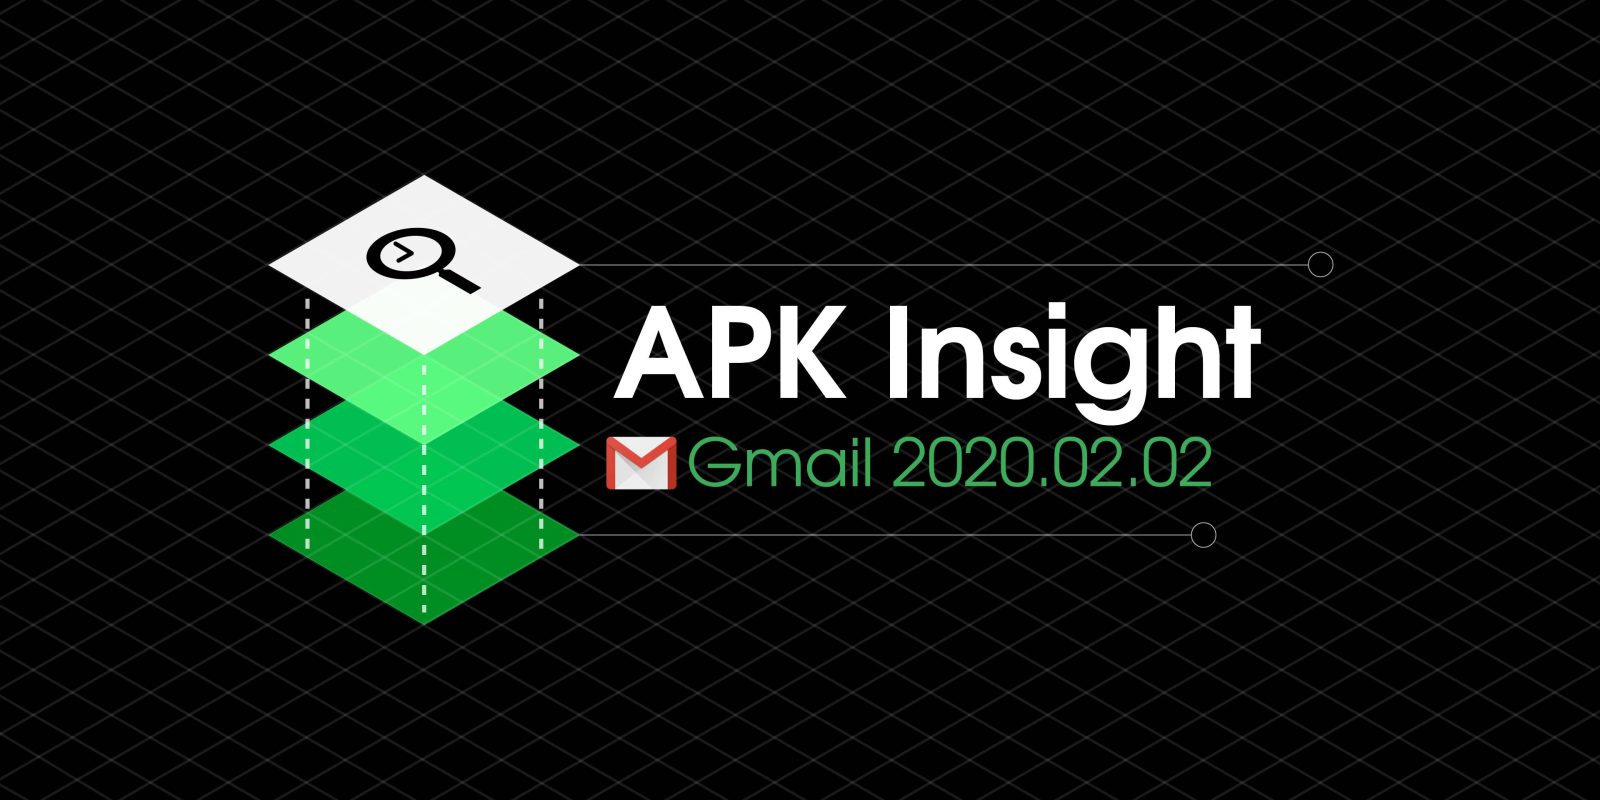 APK Insight Gmail 2020 02 02